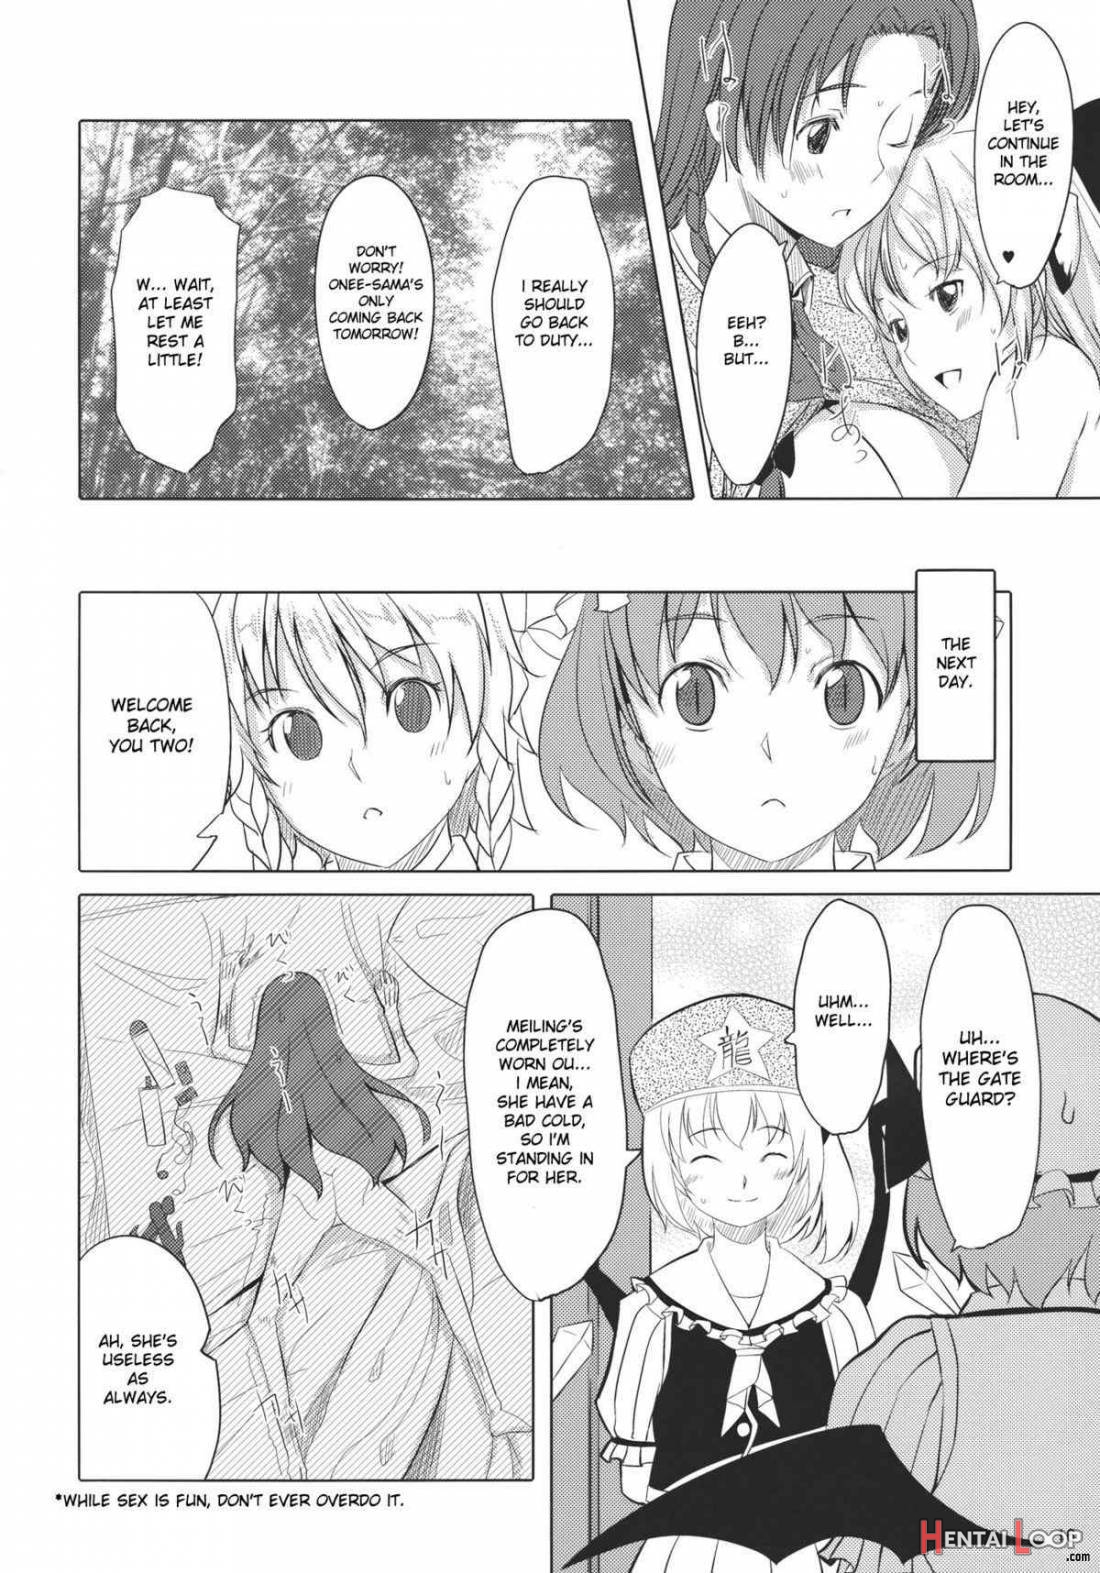 Flan-chan Infinity page 16